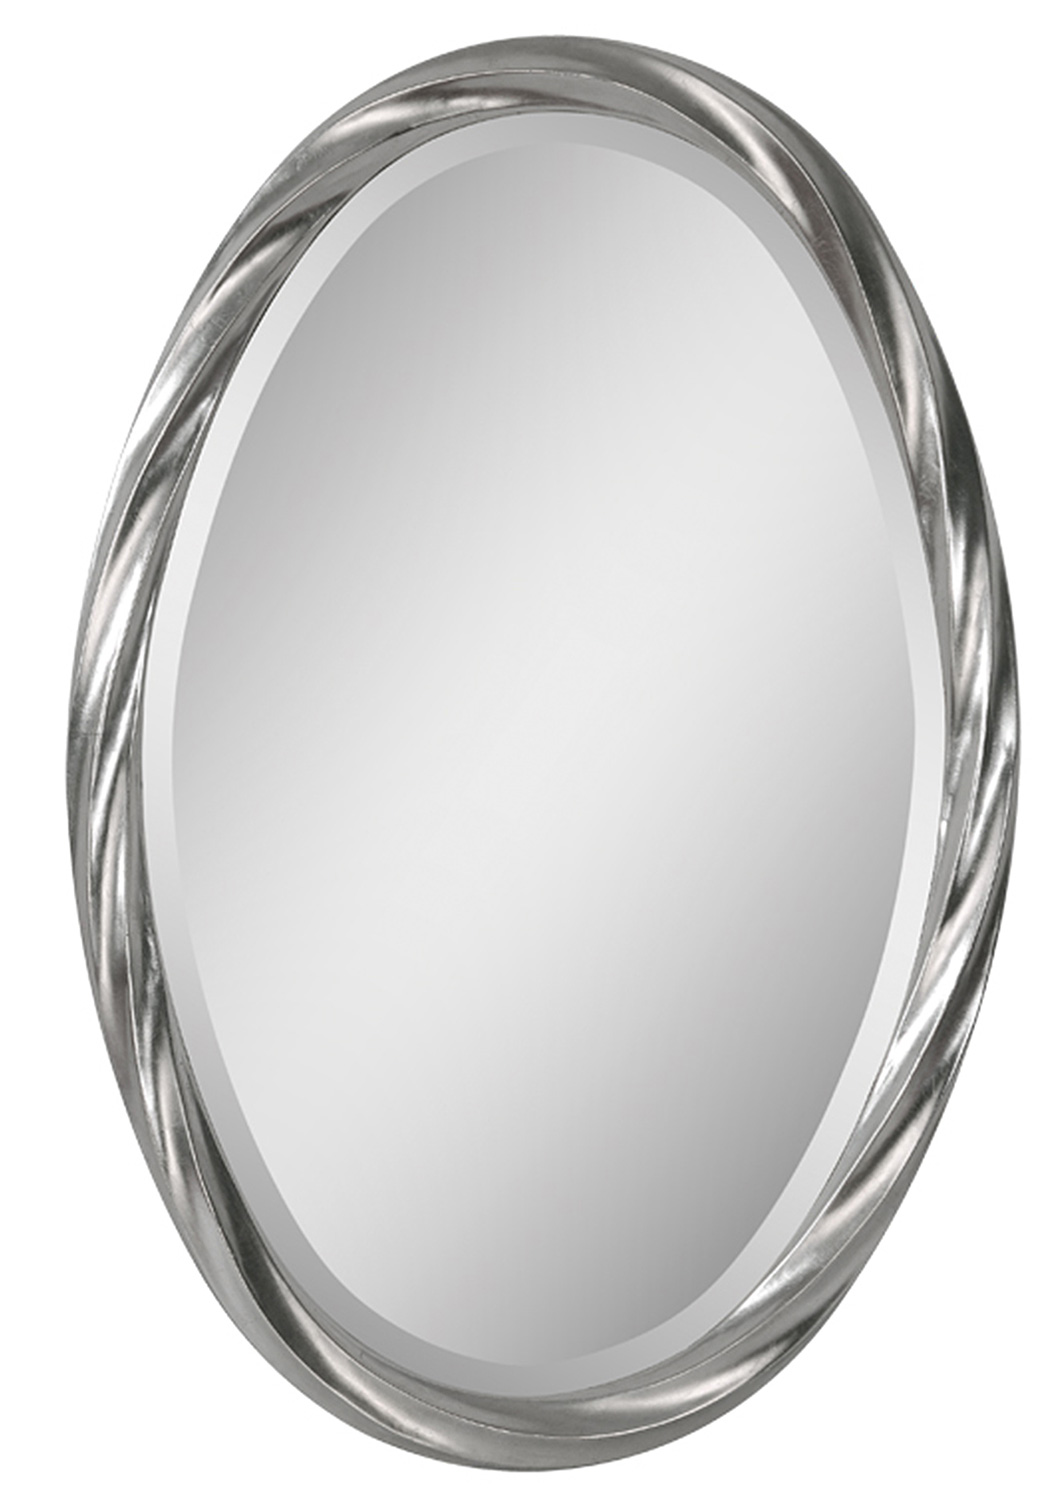 Ren-Wil Wiltshire Oval Mirror - Silver Leaf